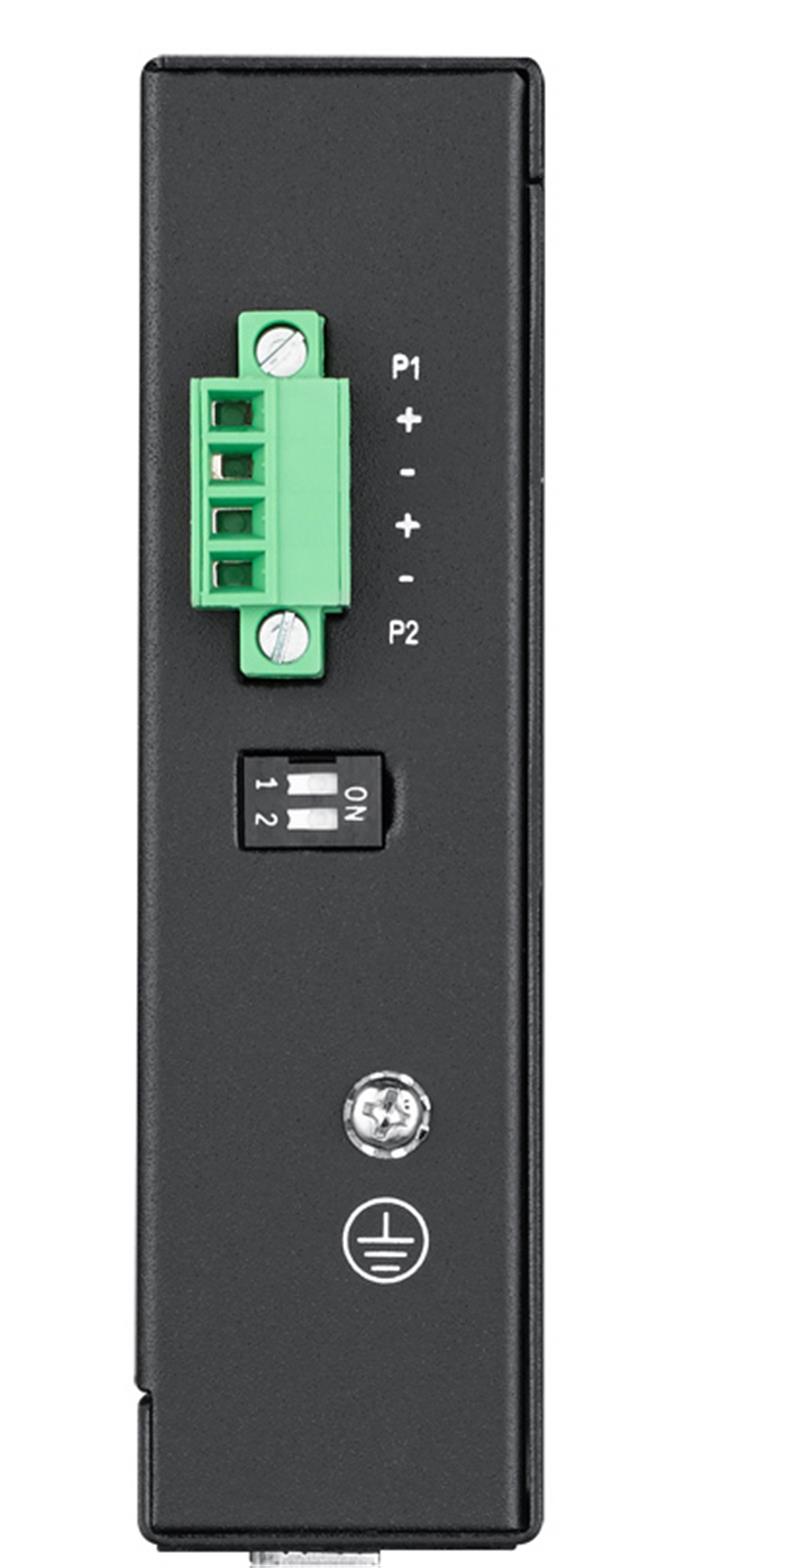 Zyxel RGS100-5P Unmanaged L2 Gigabit Ethernet (10/100/1000) Zwart Power over Ethernet (PoE)